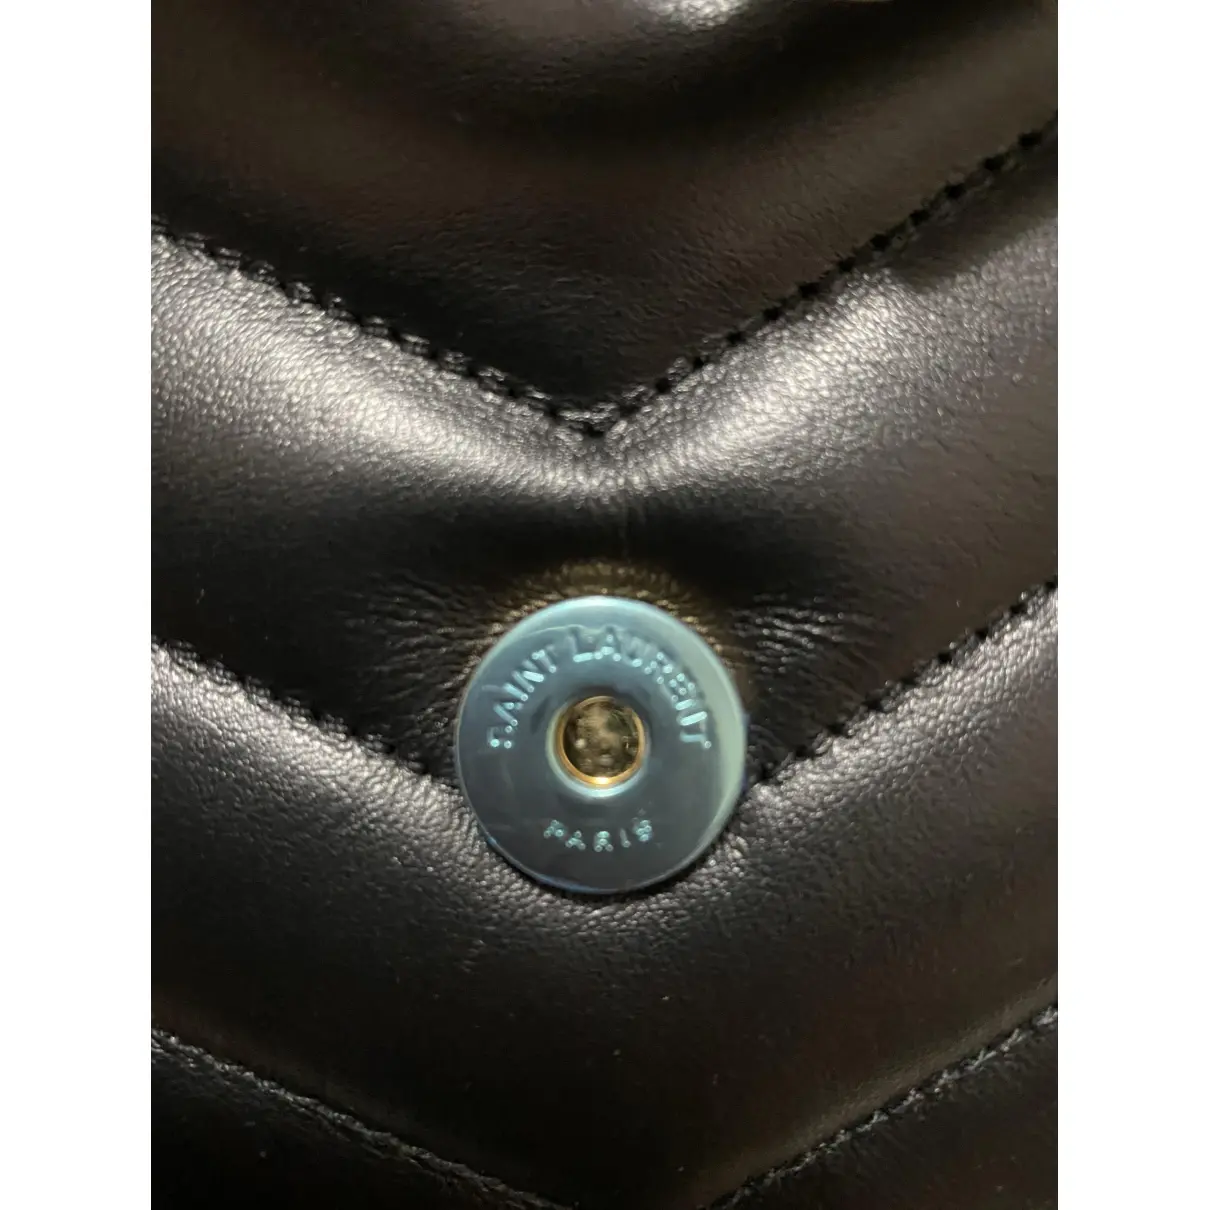 Buy Saint Laurent Loulou leather crossbody bag online